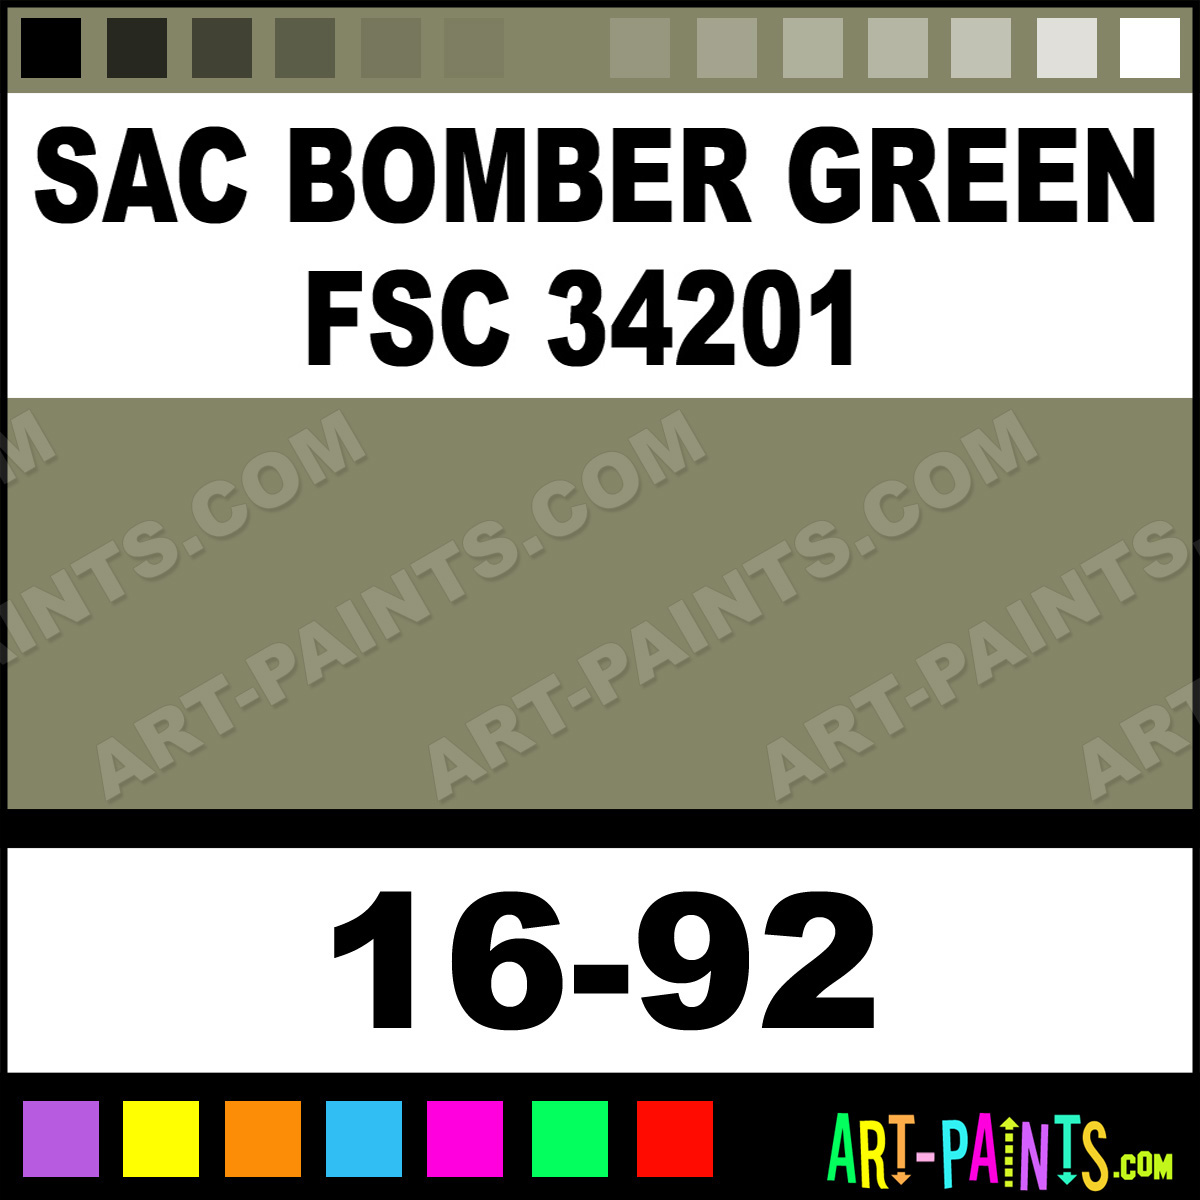 SAC-Bomber-Green-FSC-34201-lg.jpg